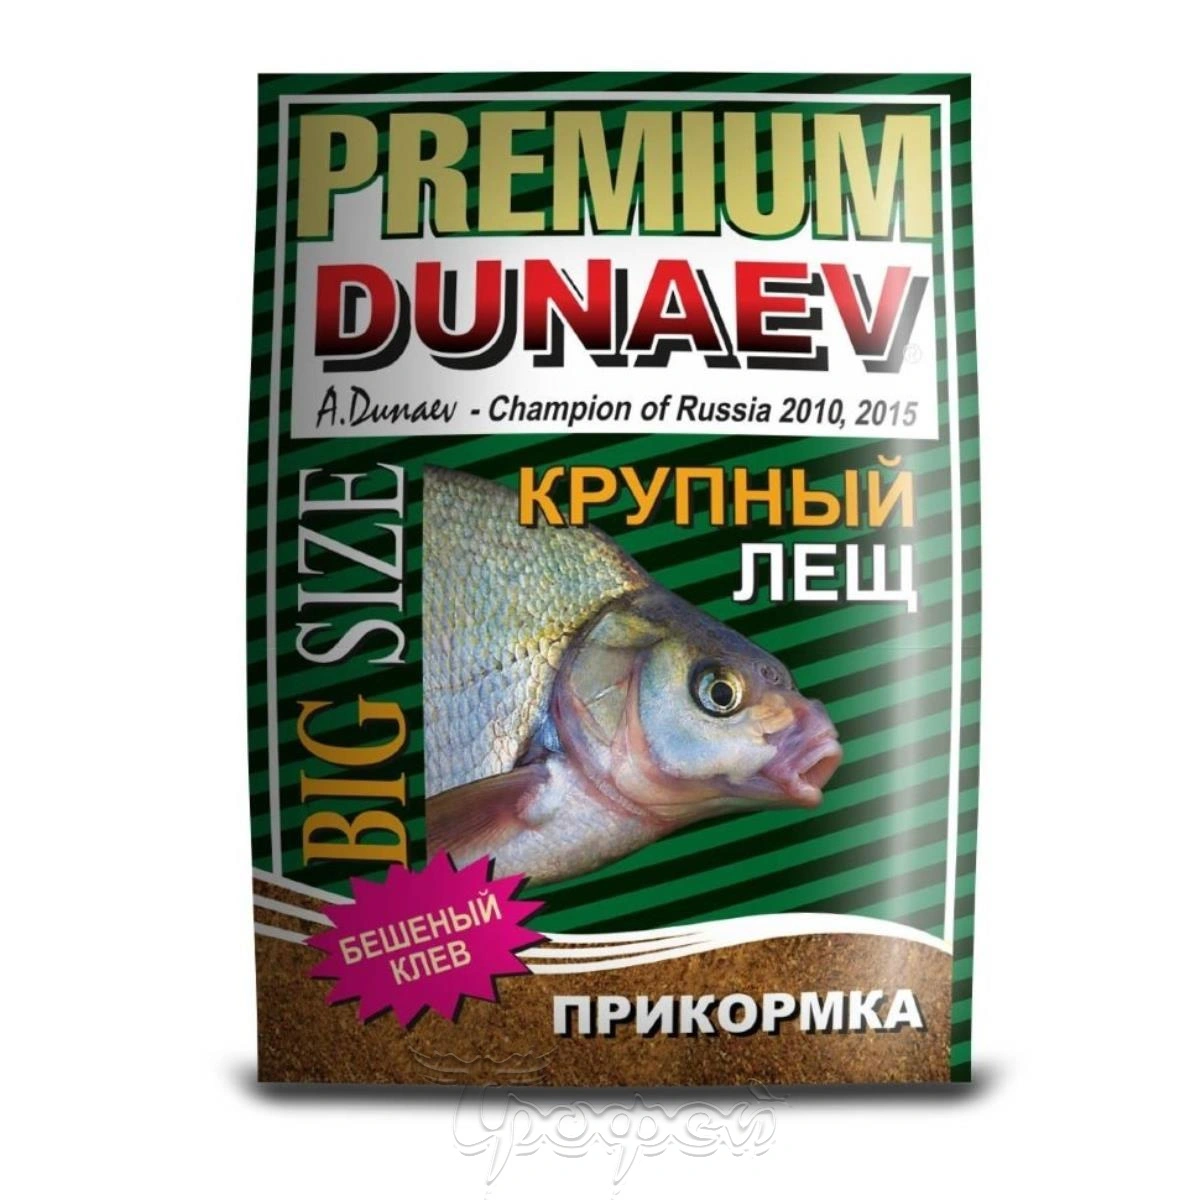 Прикормки дунаев сайт. Прикормка "Dunaev-Premium" 1кг лещ крупная фракция. Прикормка "Dunaev-Premium" крупная фракция, 1 кг. Крупный лещ прикормка Дунаев премиум. Dunaev Premium крупный лещ.